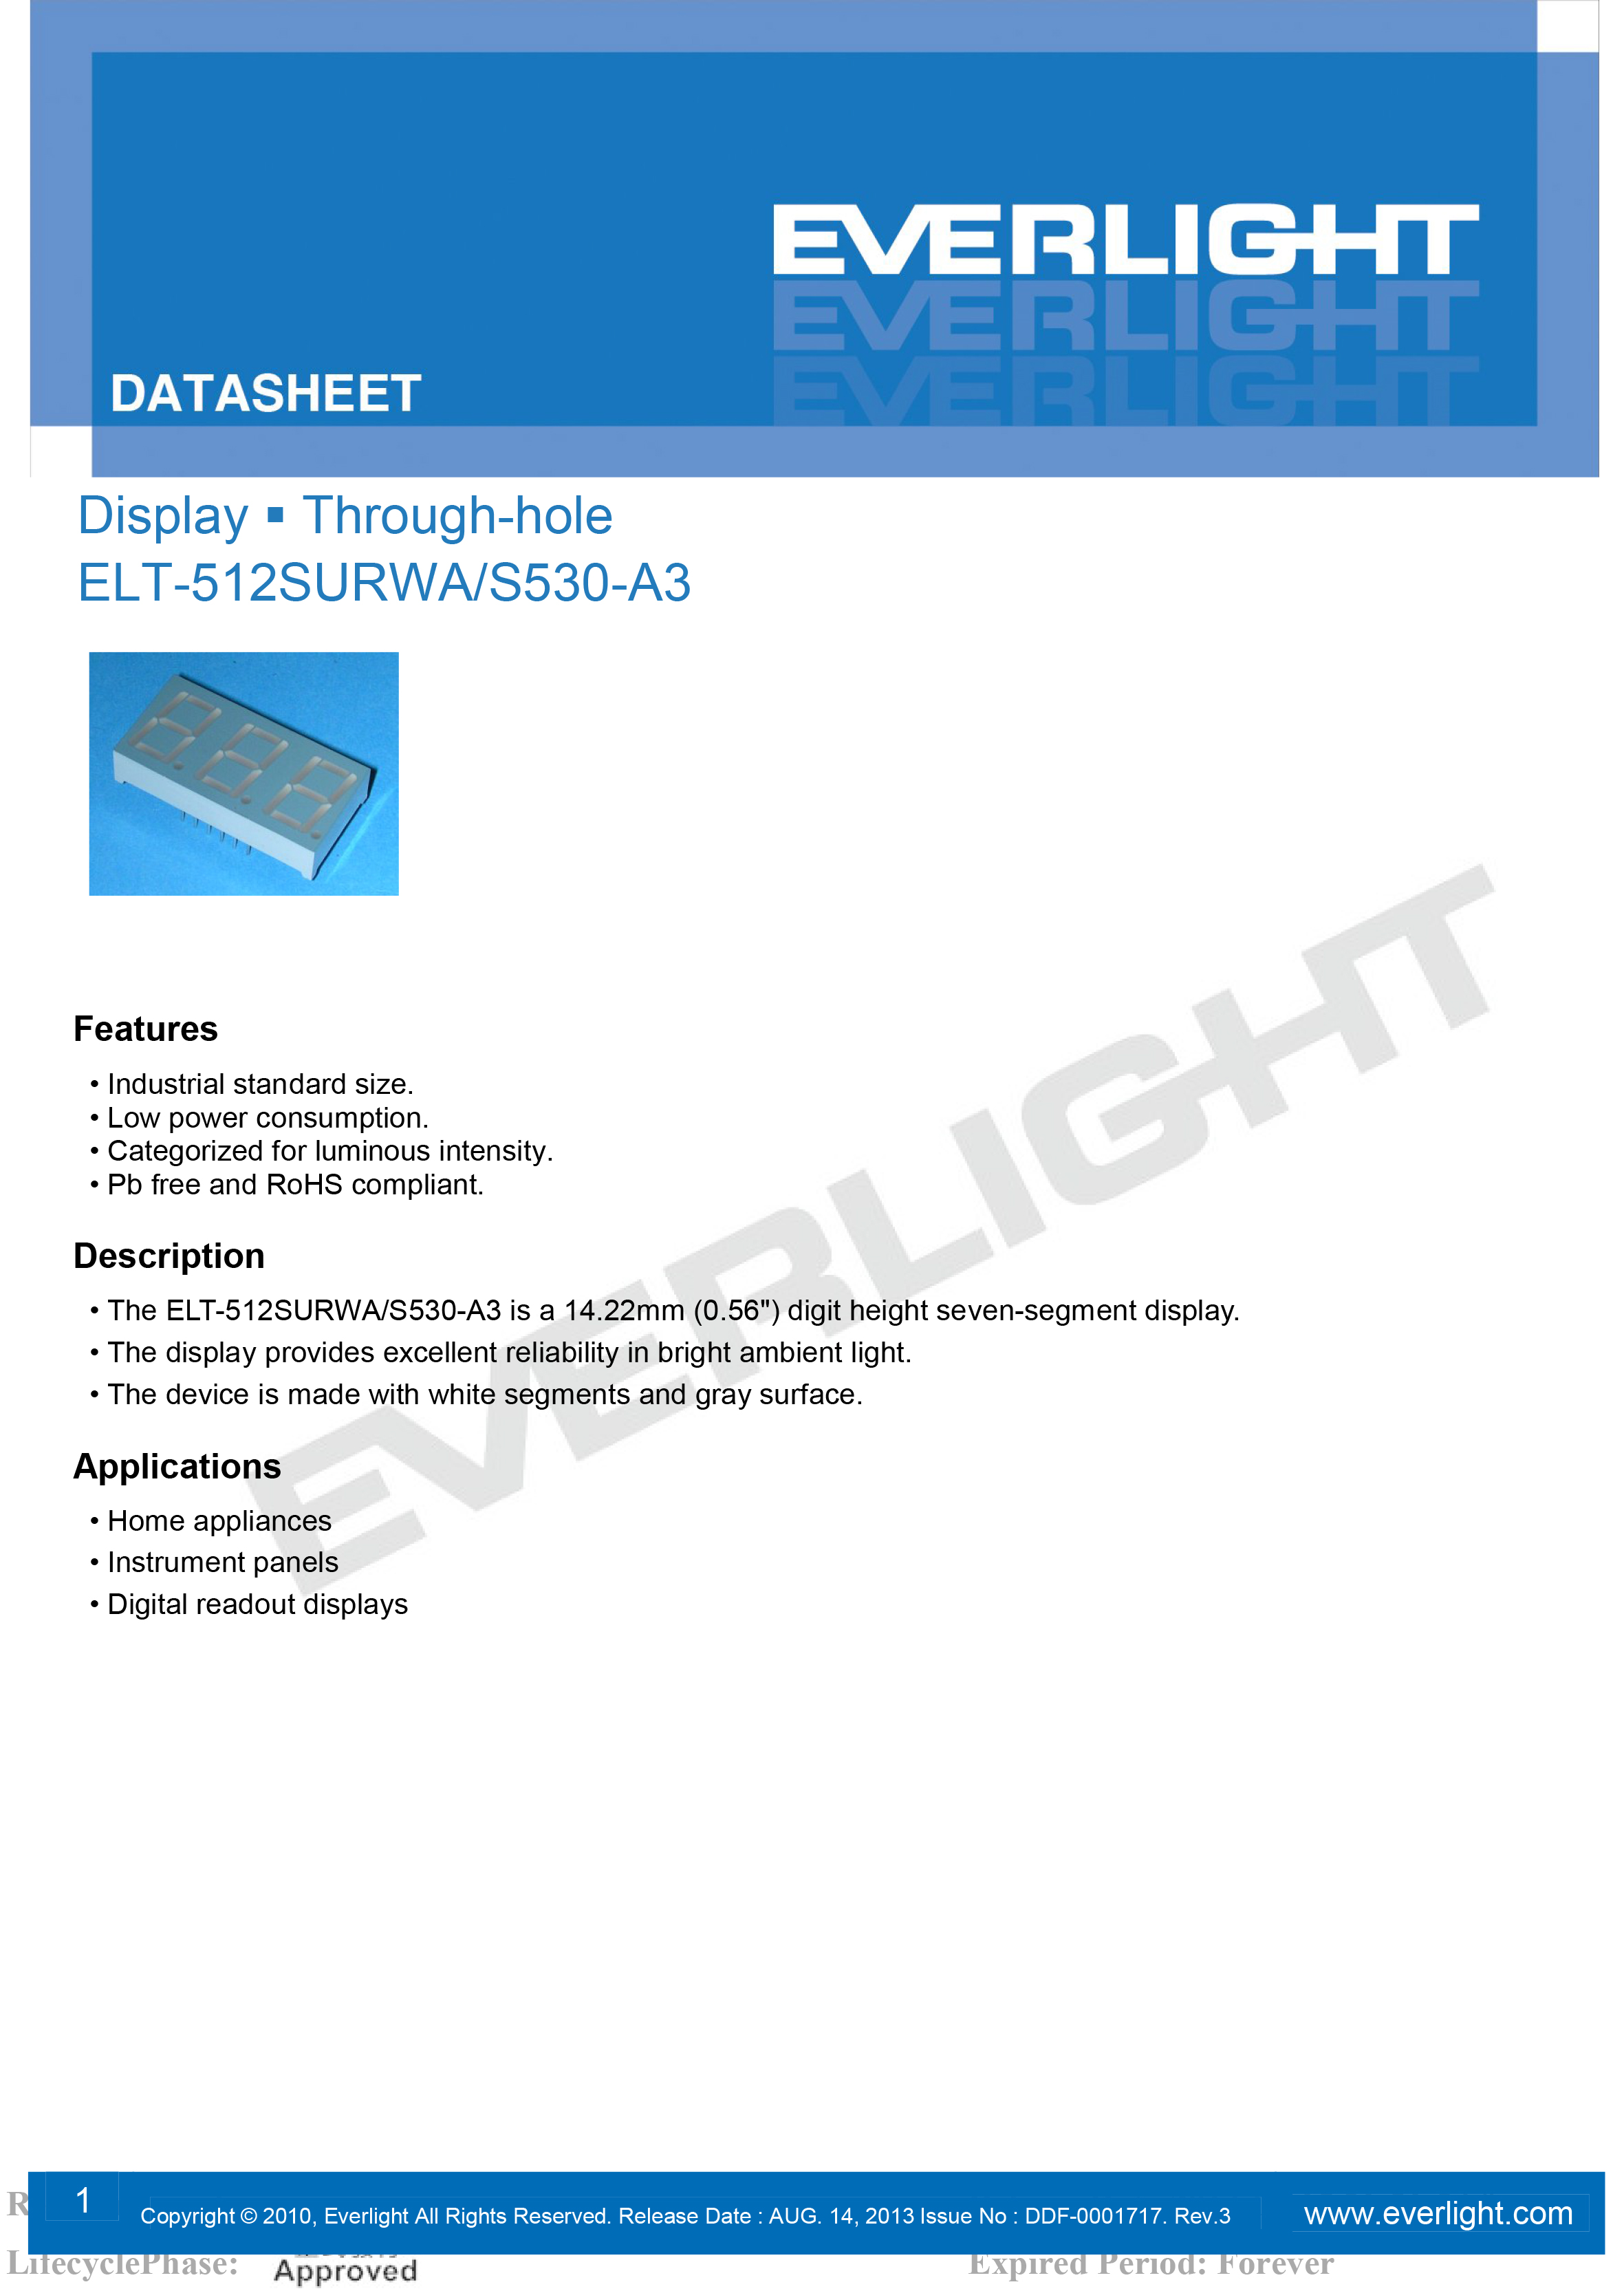 EVERLIGHT DIGITAL TUBE ELT-512SURWA/S530-A3 Datasheet